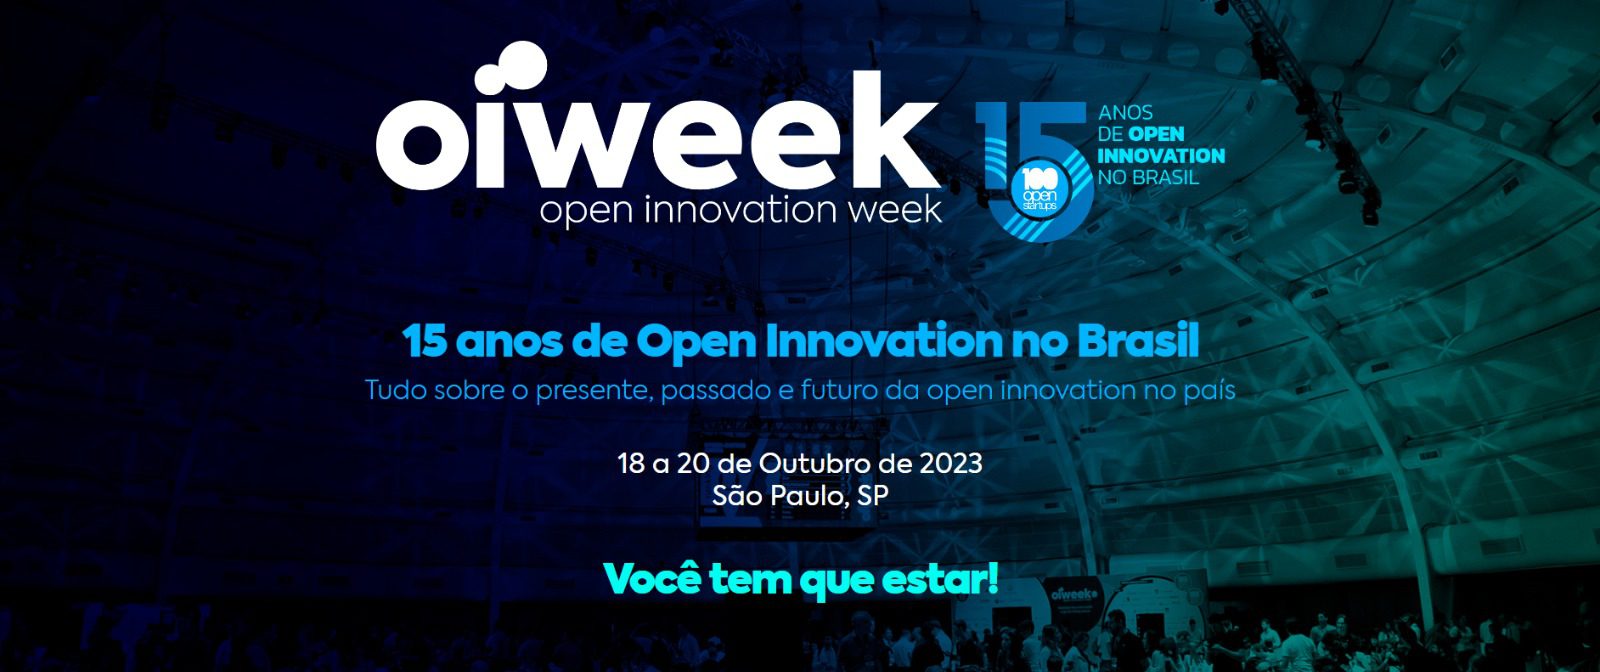 15 anos de Open Innovation no Brasil